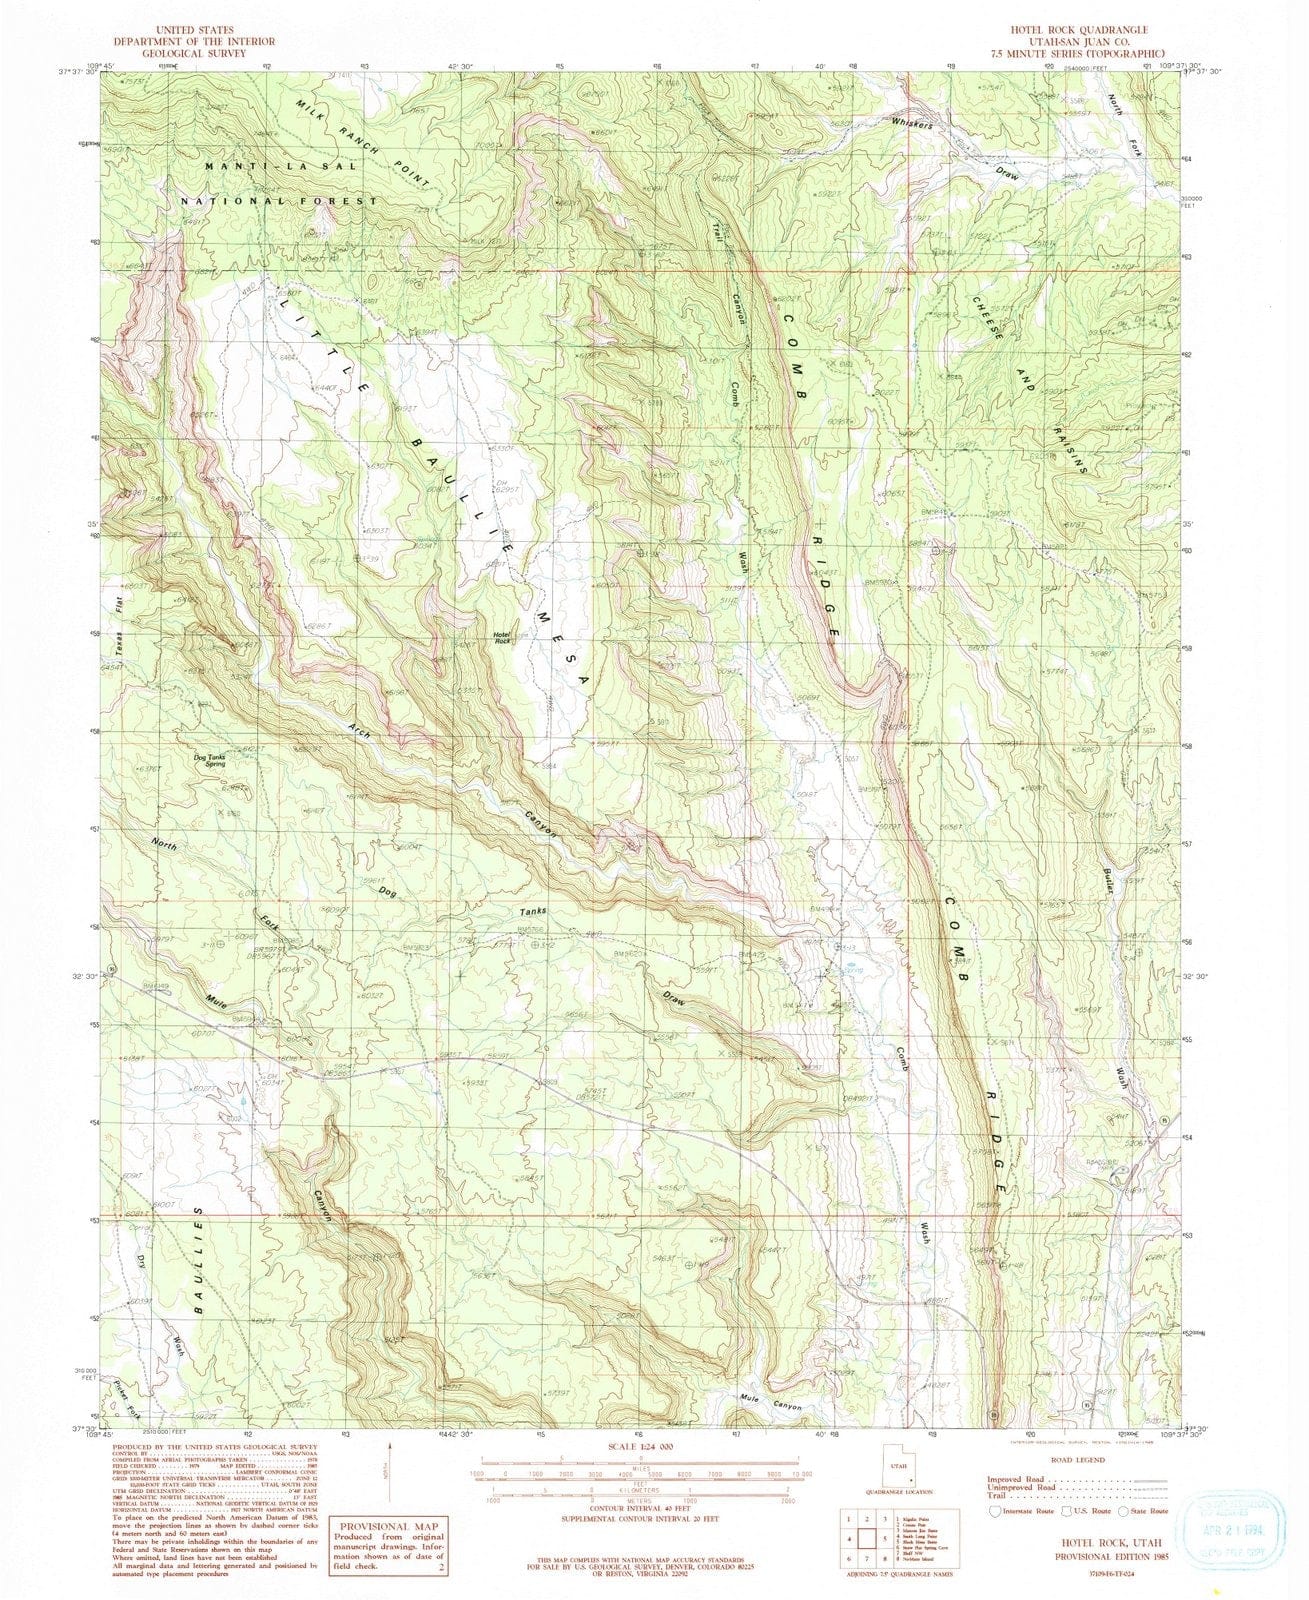 1985 Hotel Rock, UT - Utah - USGS Topographic Map